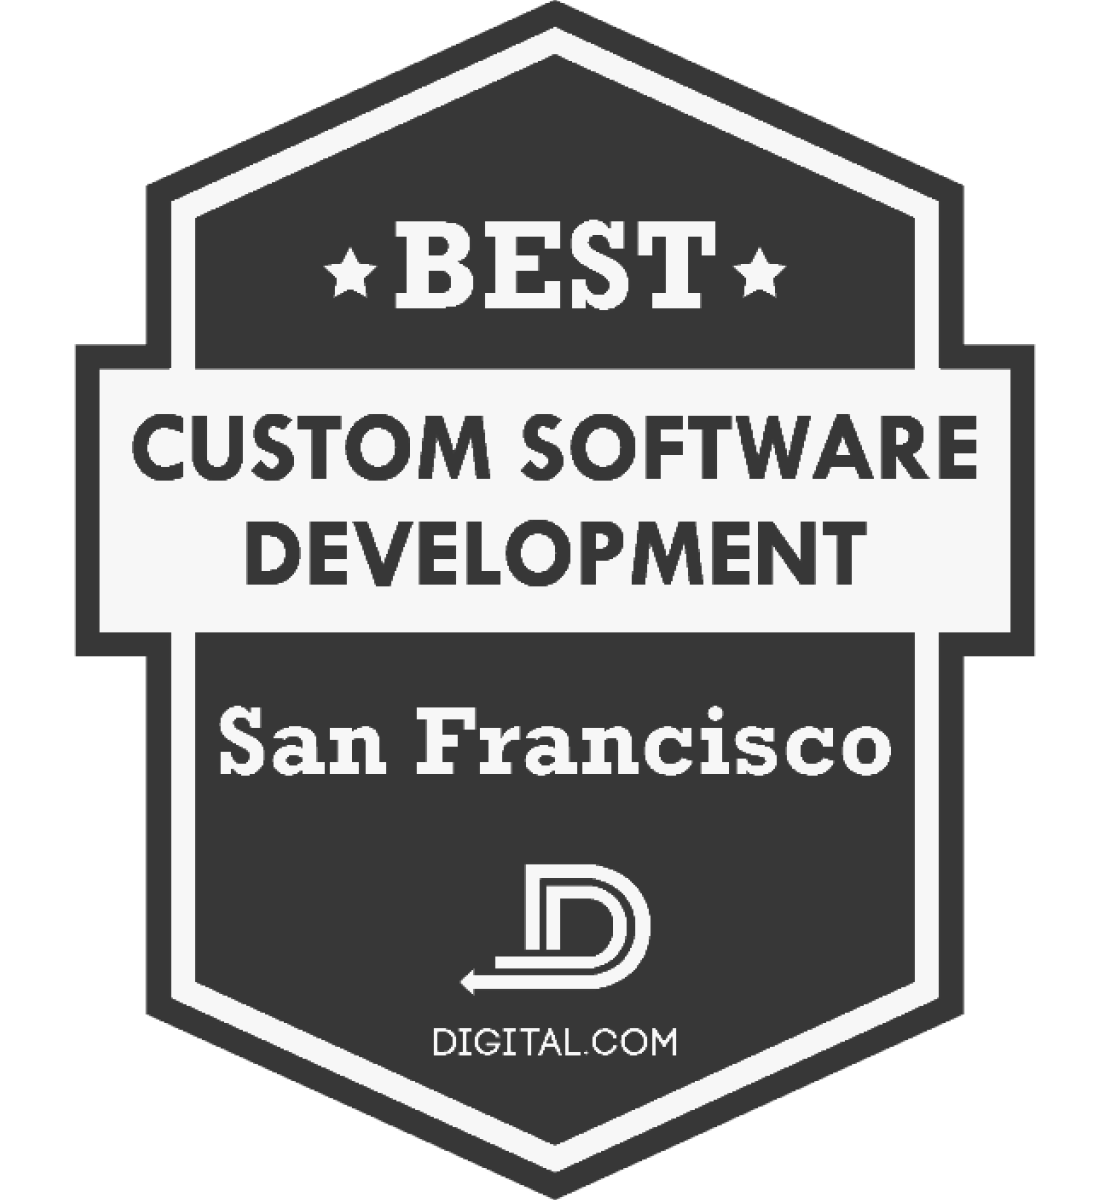 Best Custom Software Development San Francisco - Digital